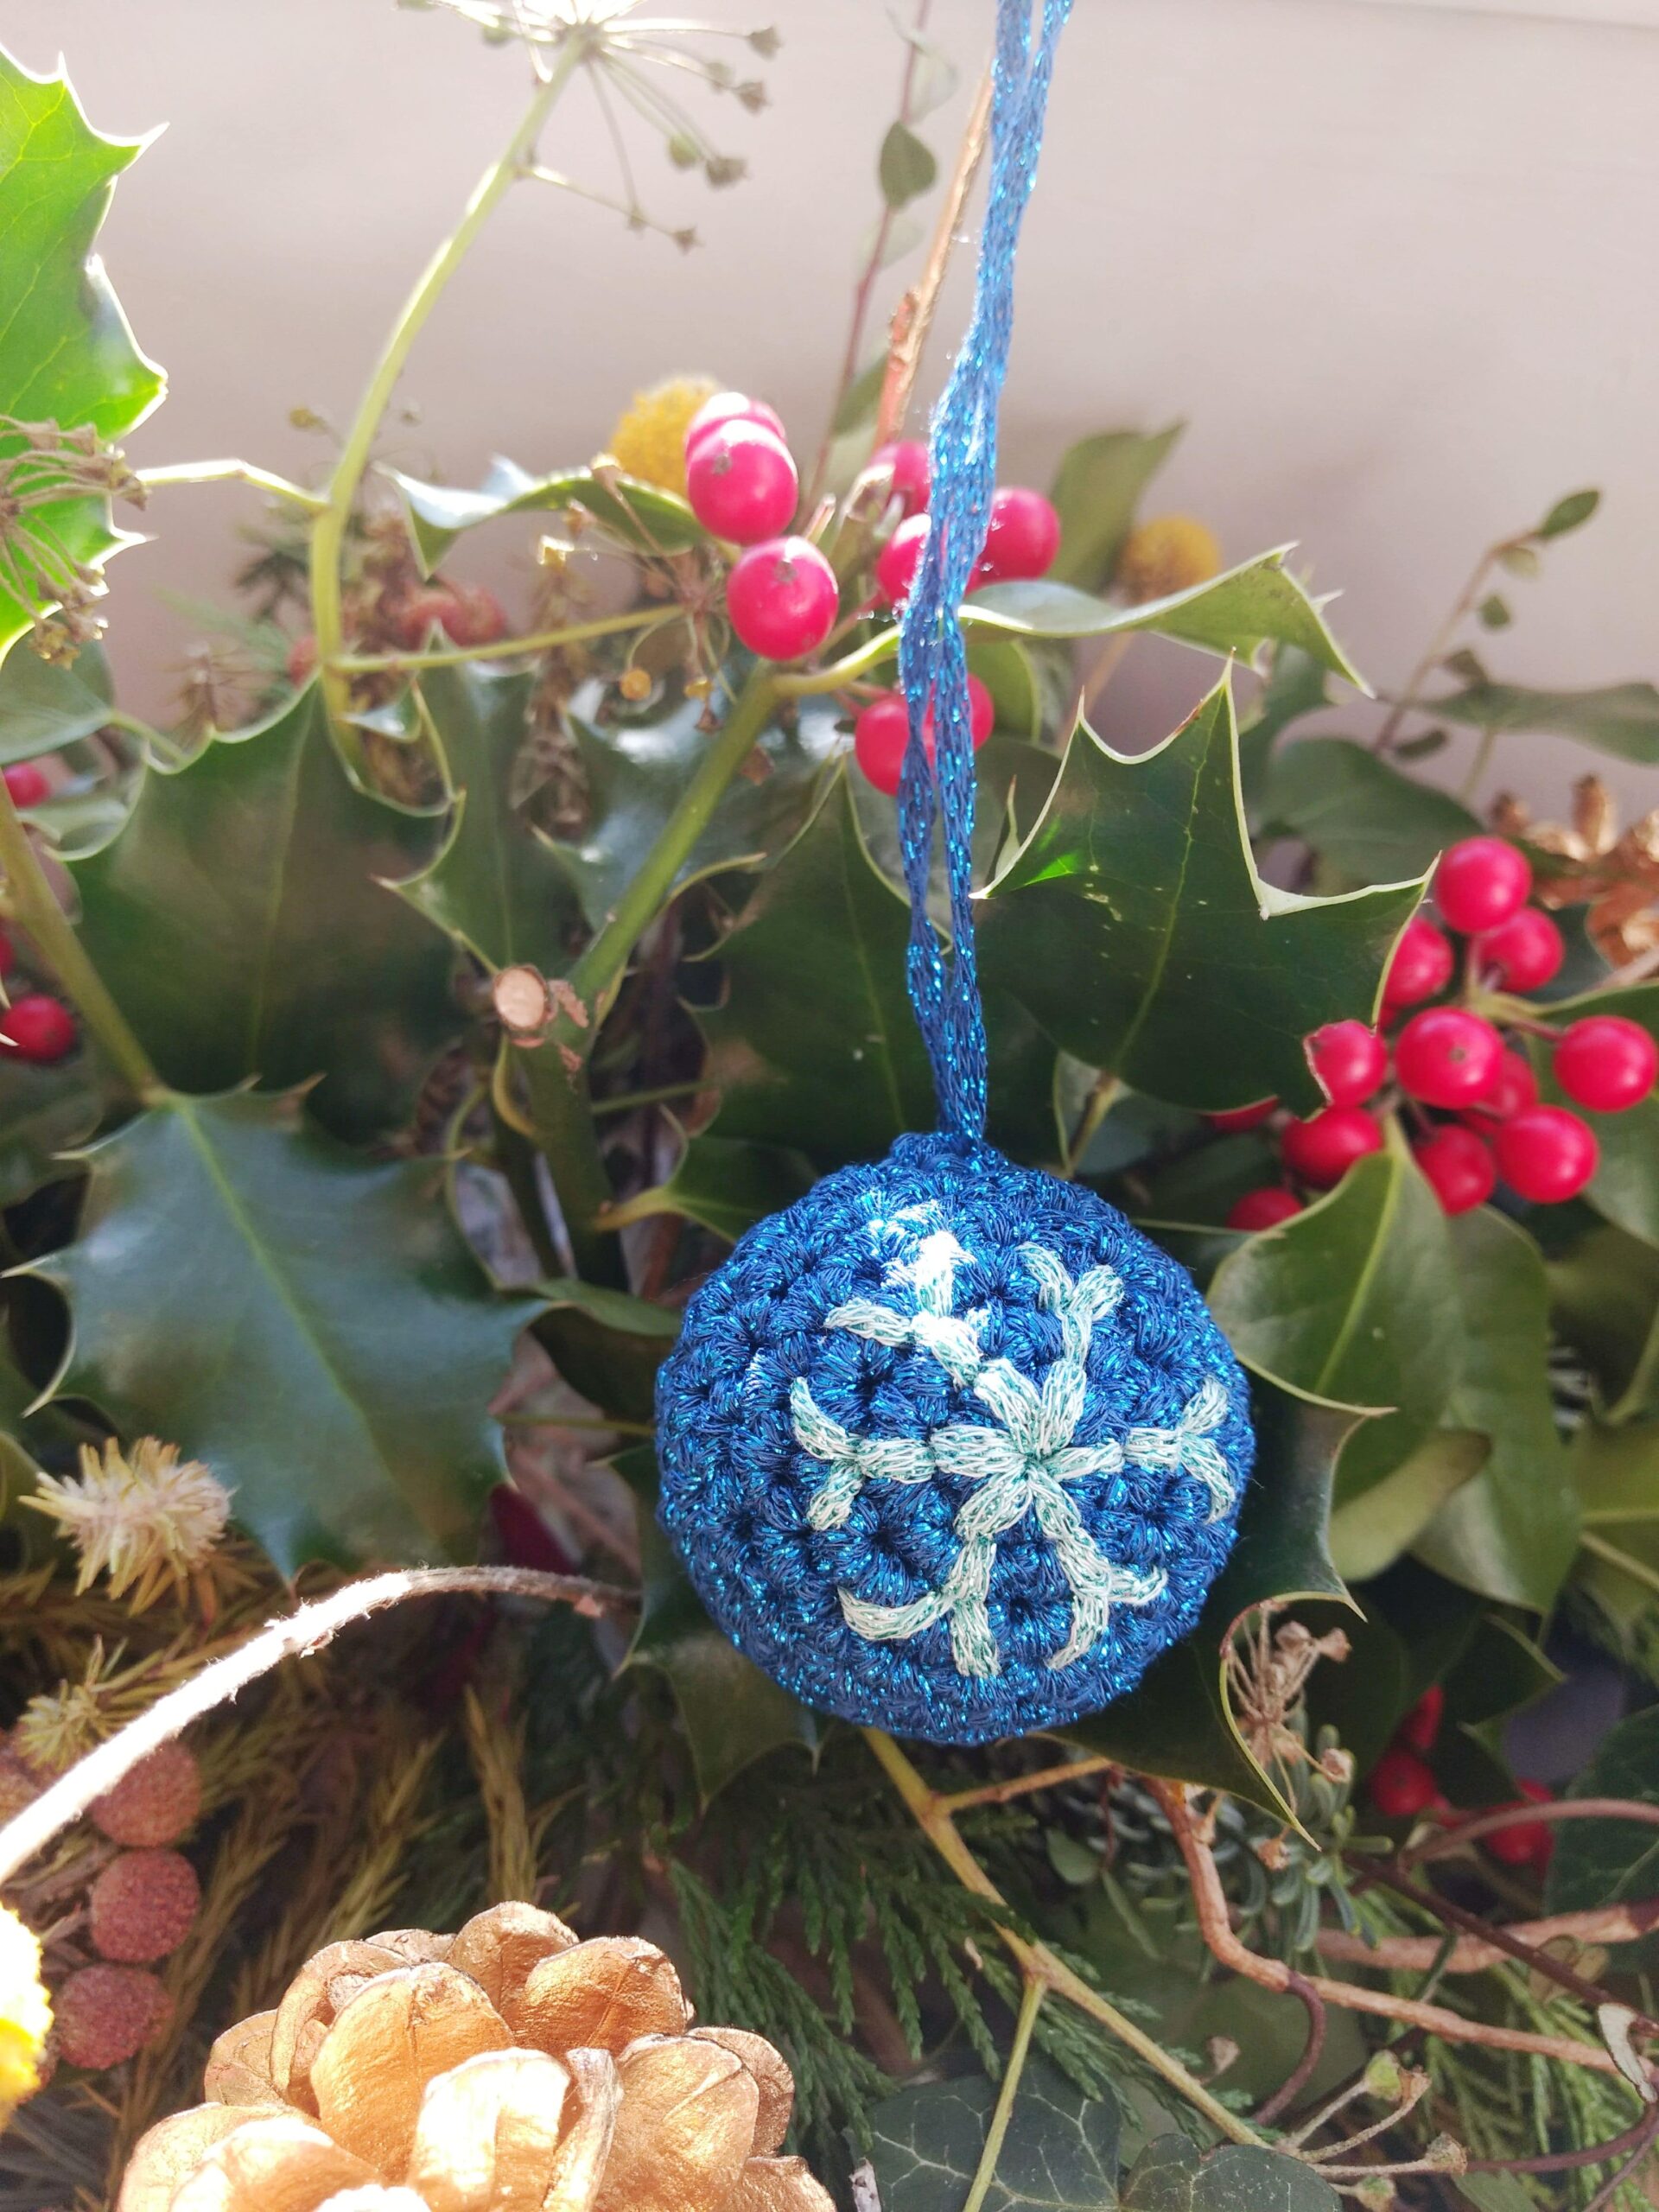 Snowflake Christmas Bauble - Free crochet pattern - crochet bauble - Crochet Cloudberry